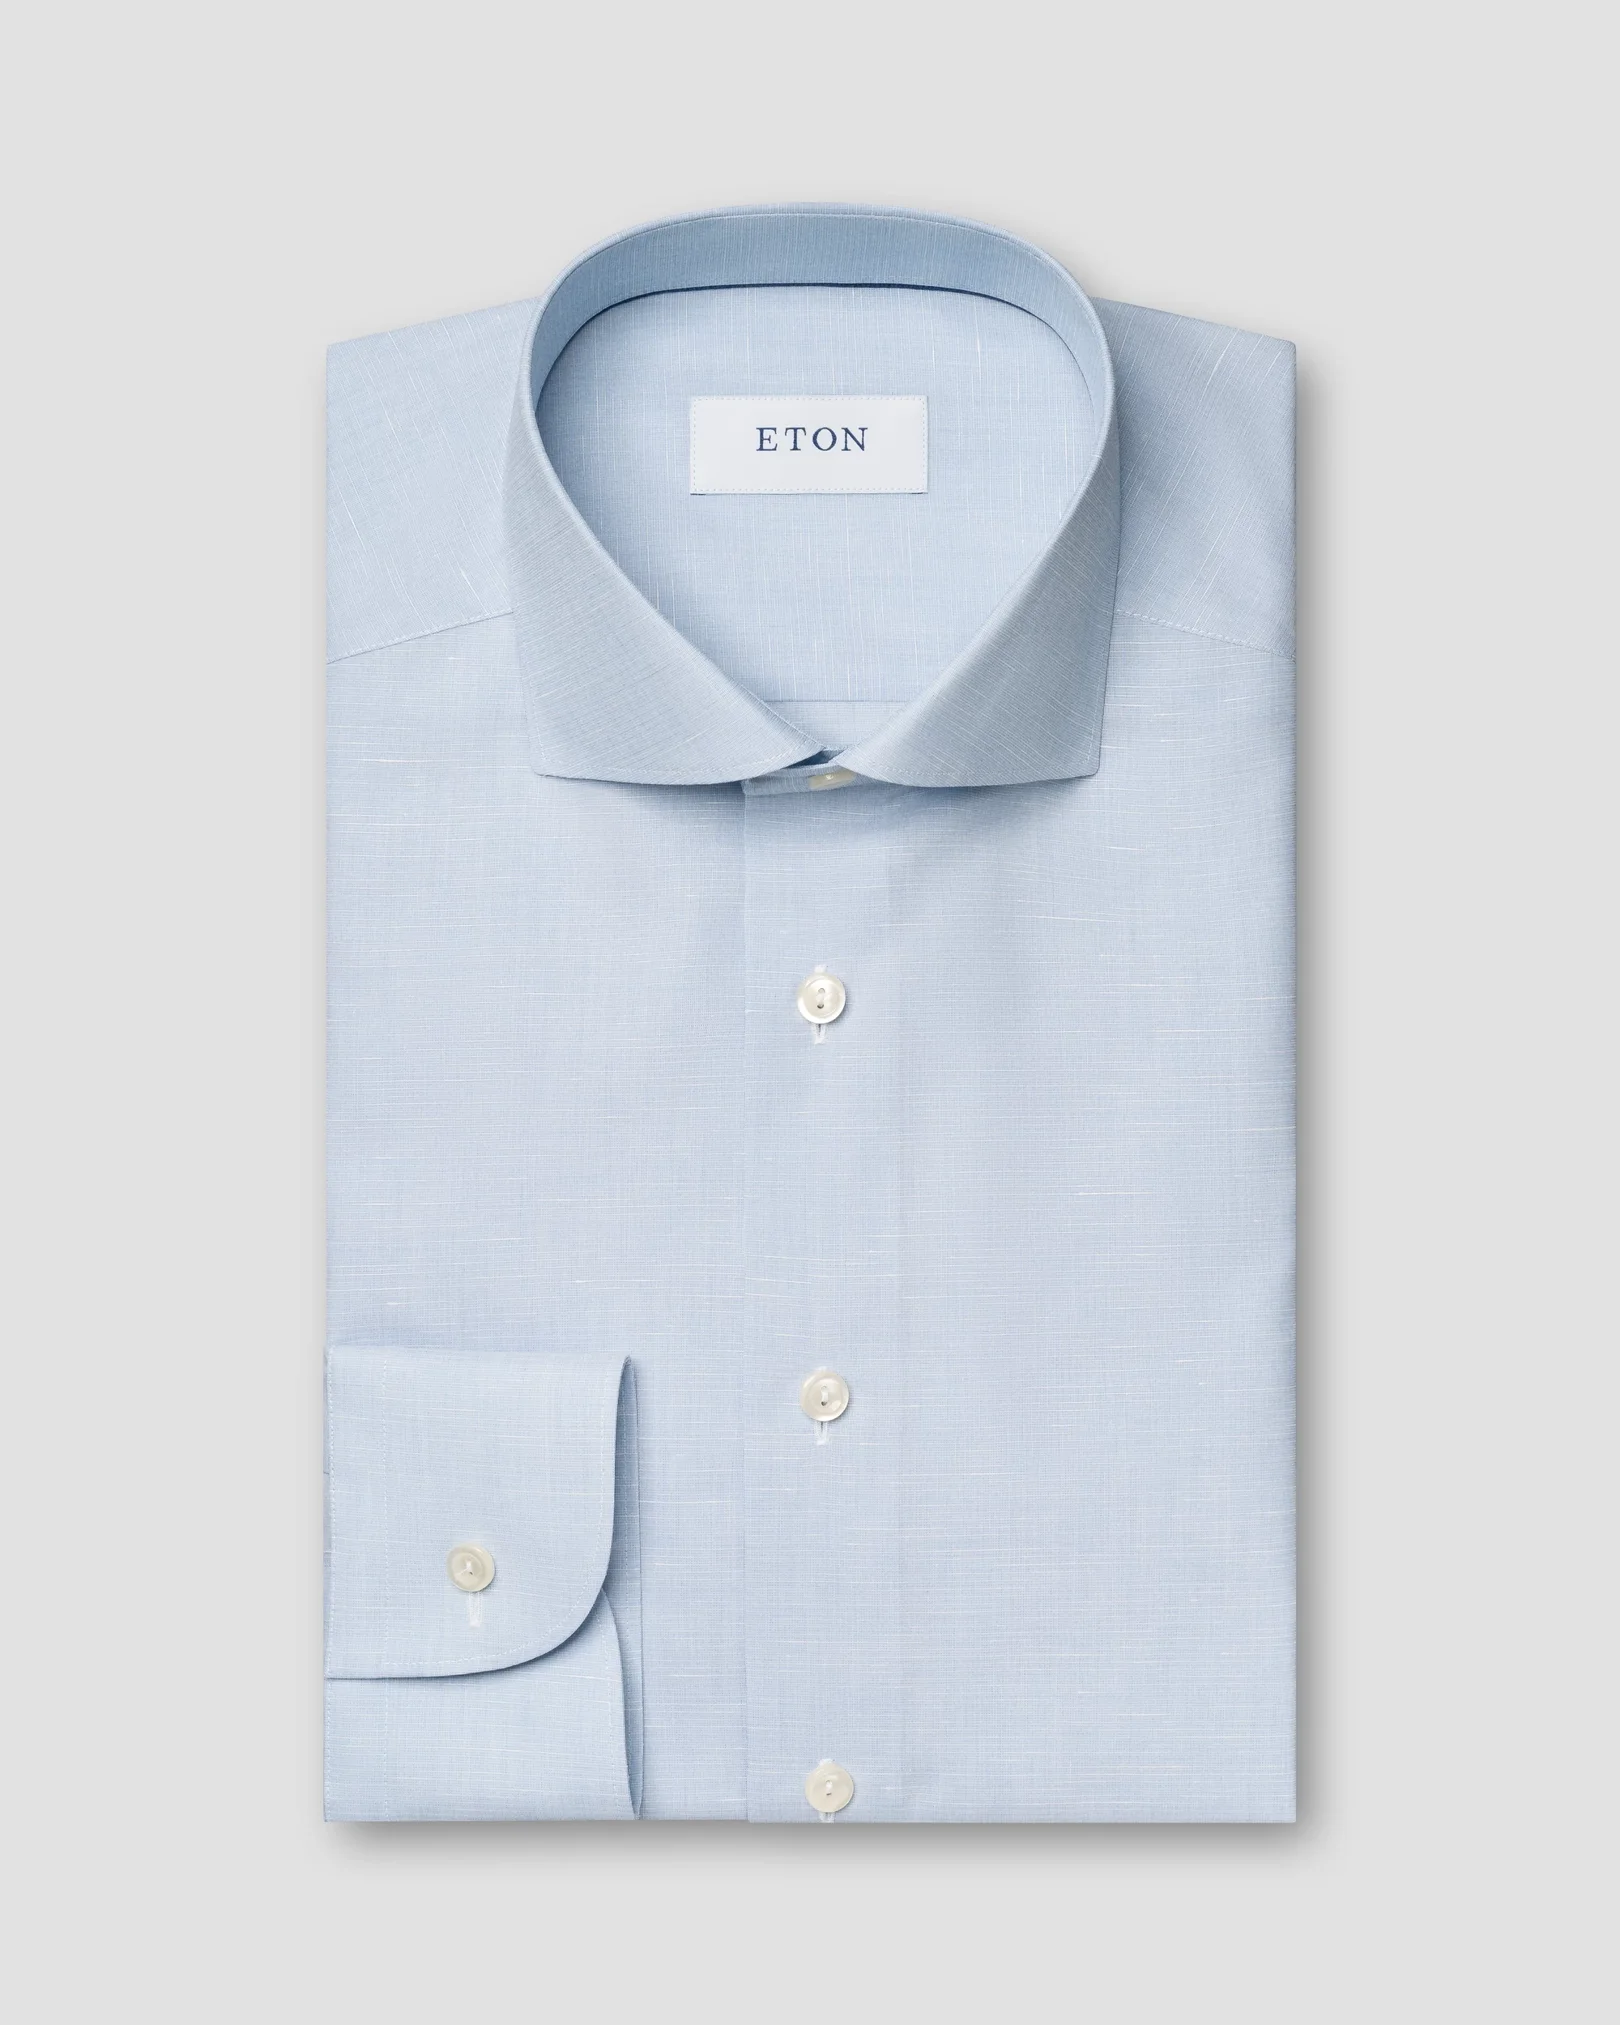 Eton - light blue semi solid cotton linen shirt